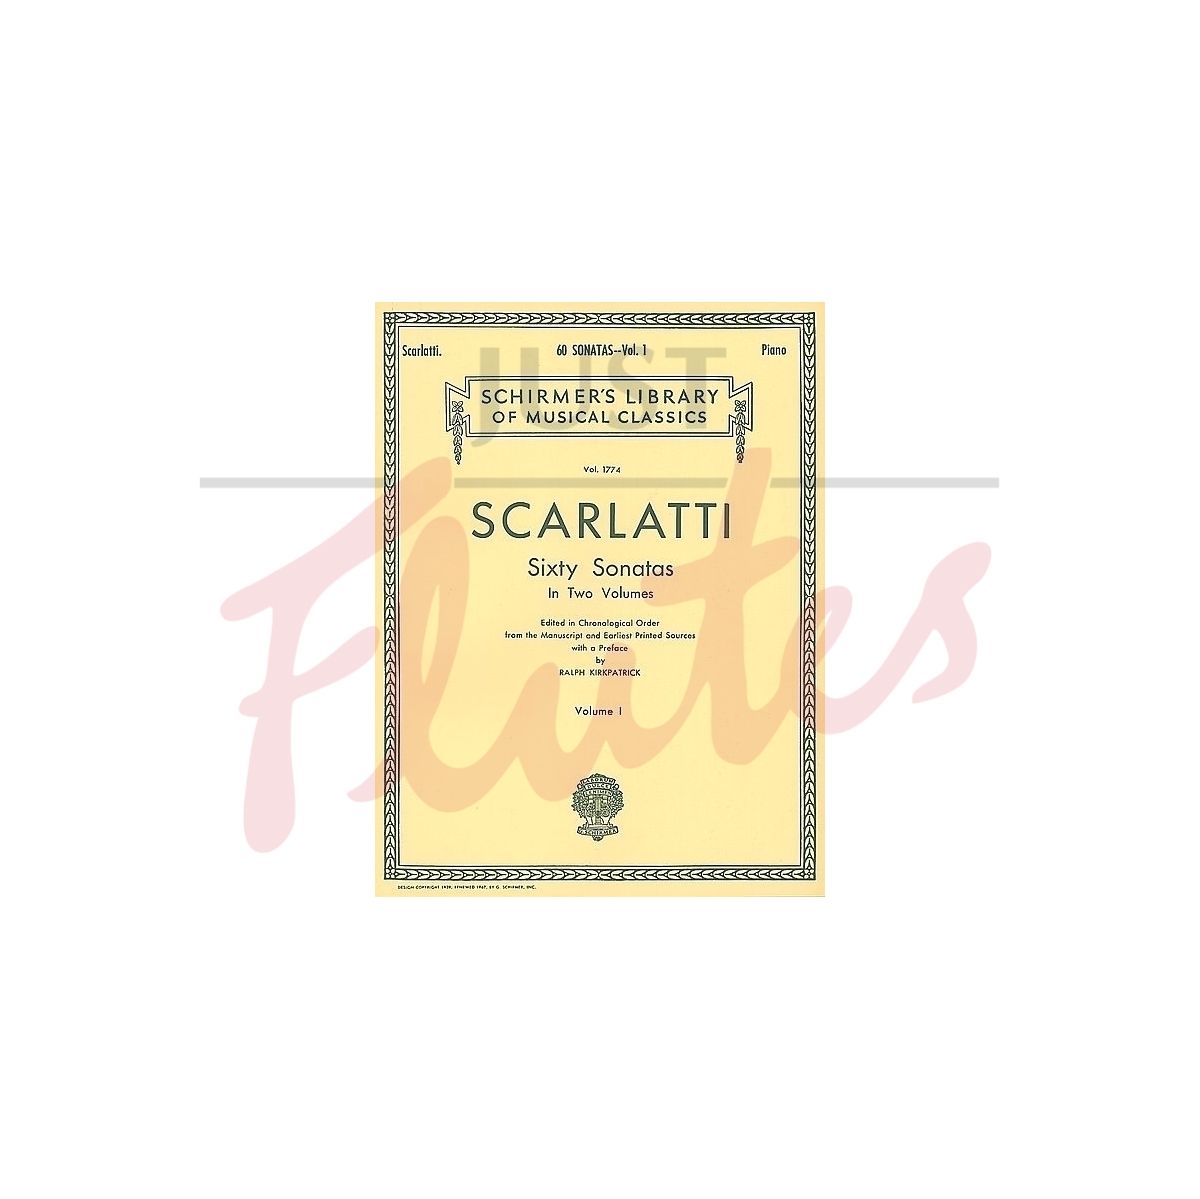 Sixty Sonatas for Piano, Vol. 1